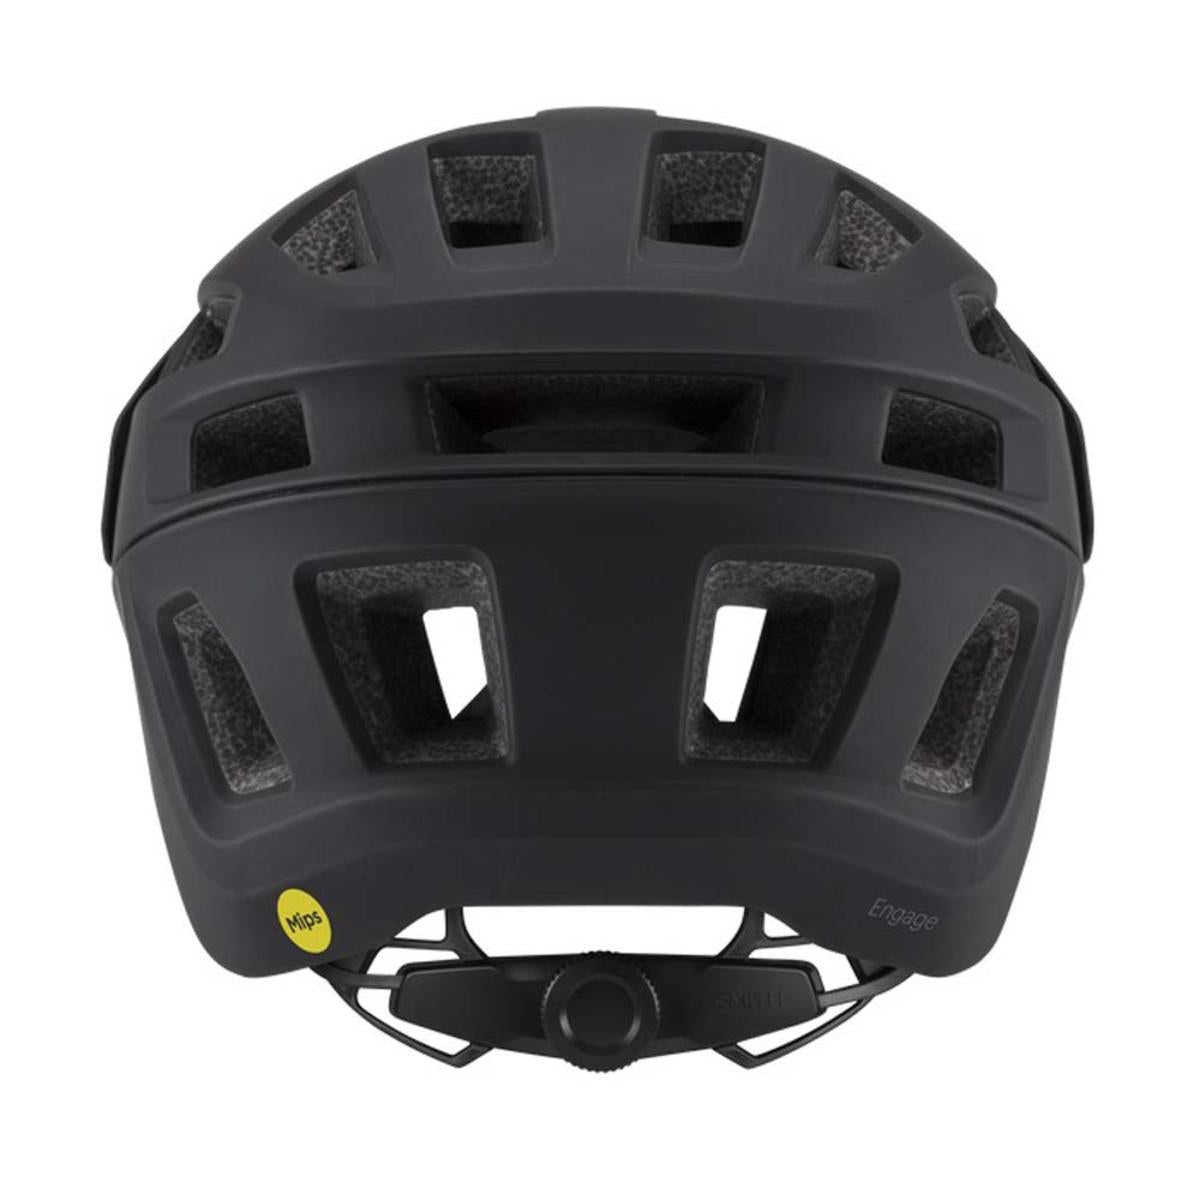 Smith Optics Engage Mips Mountain Bike Helmets - Matte Black